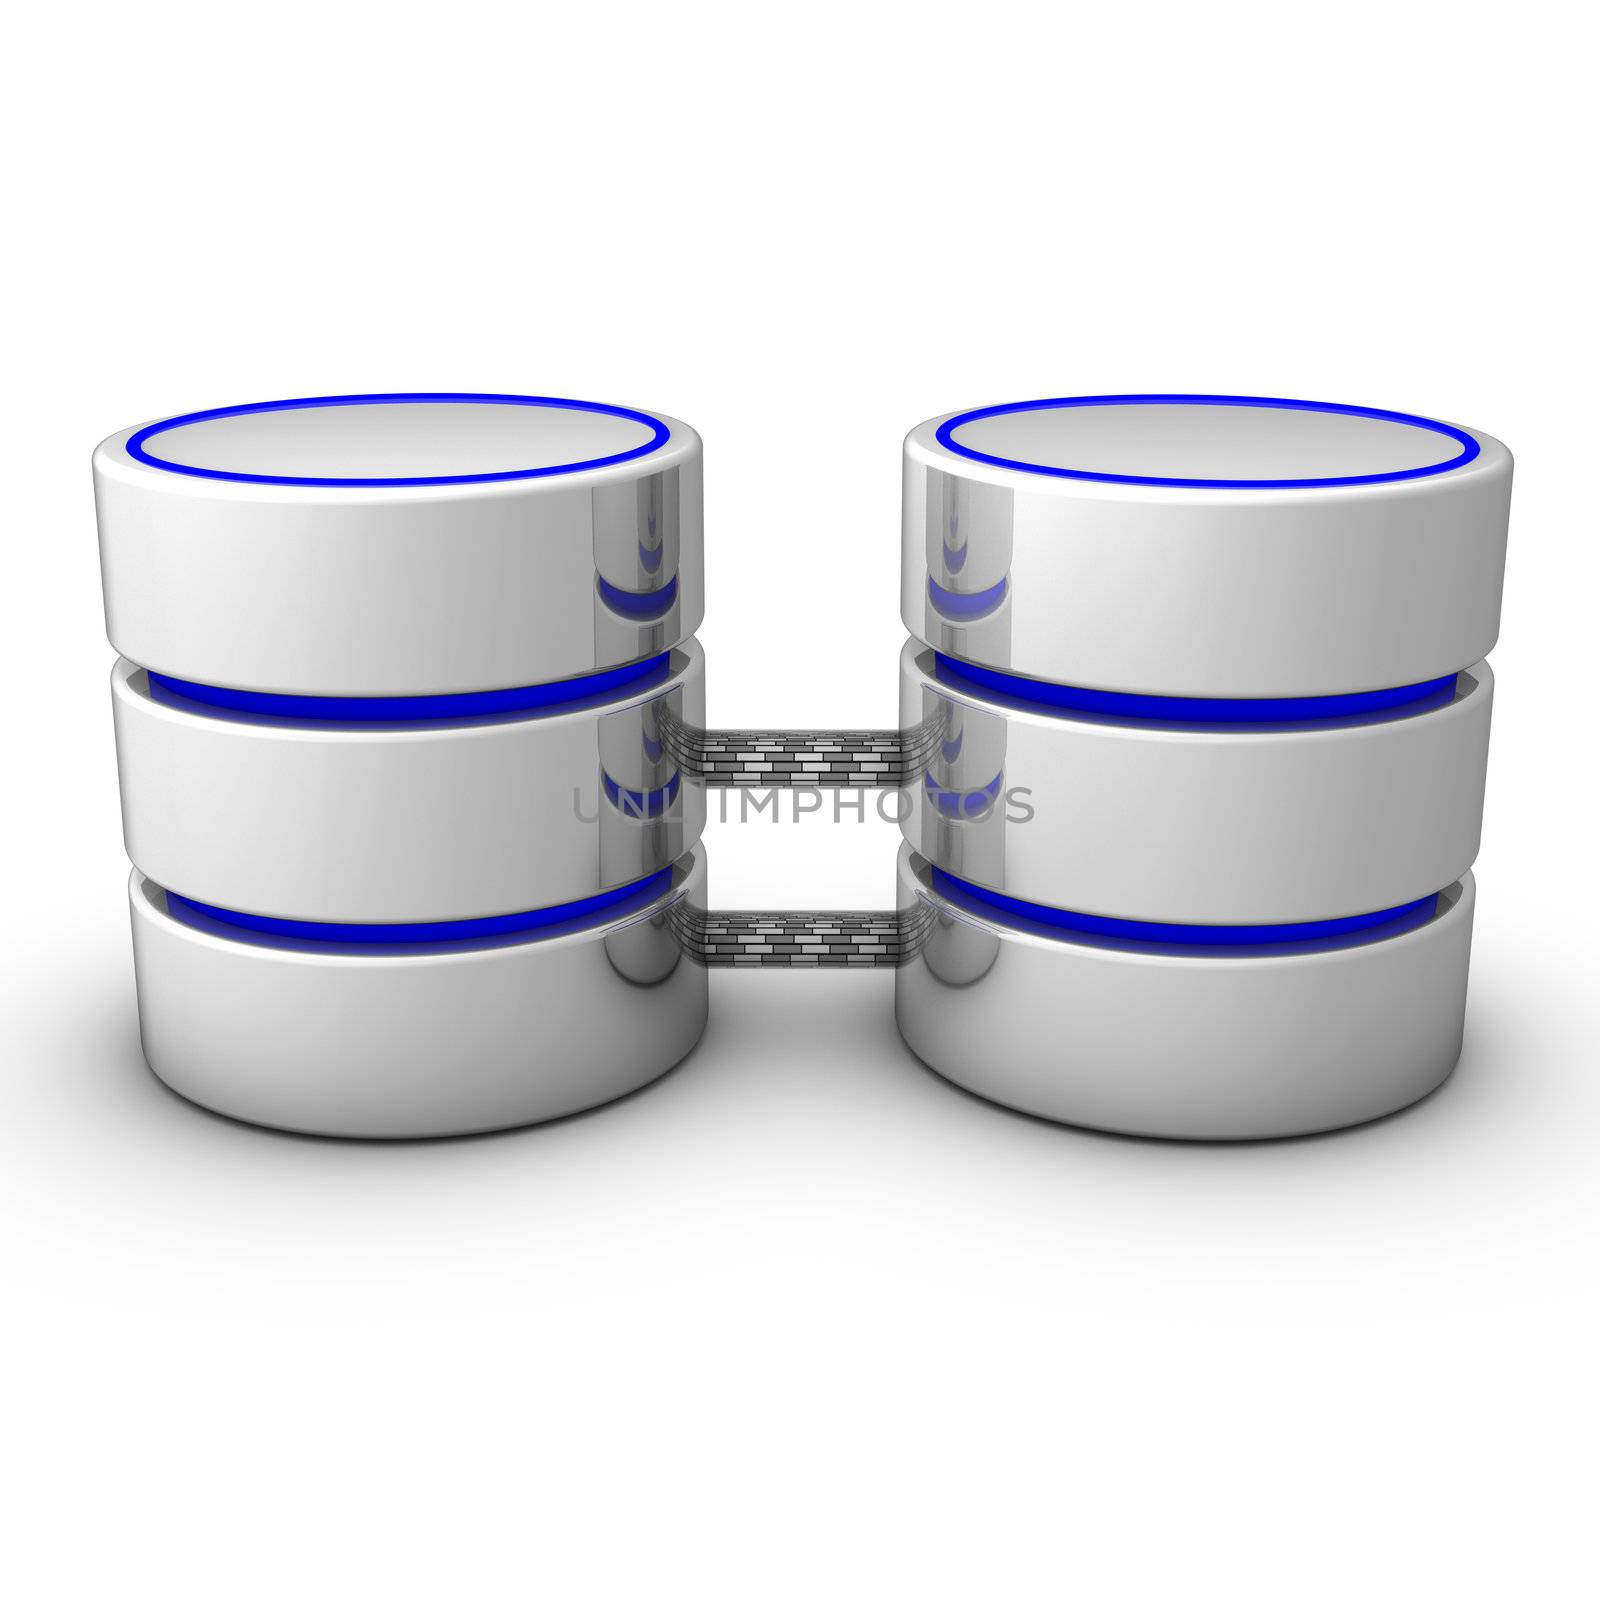 Database mirroring increases database availability.